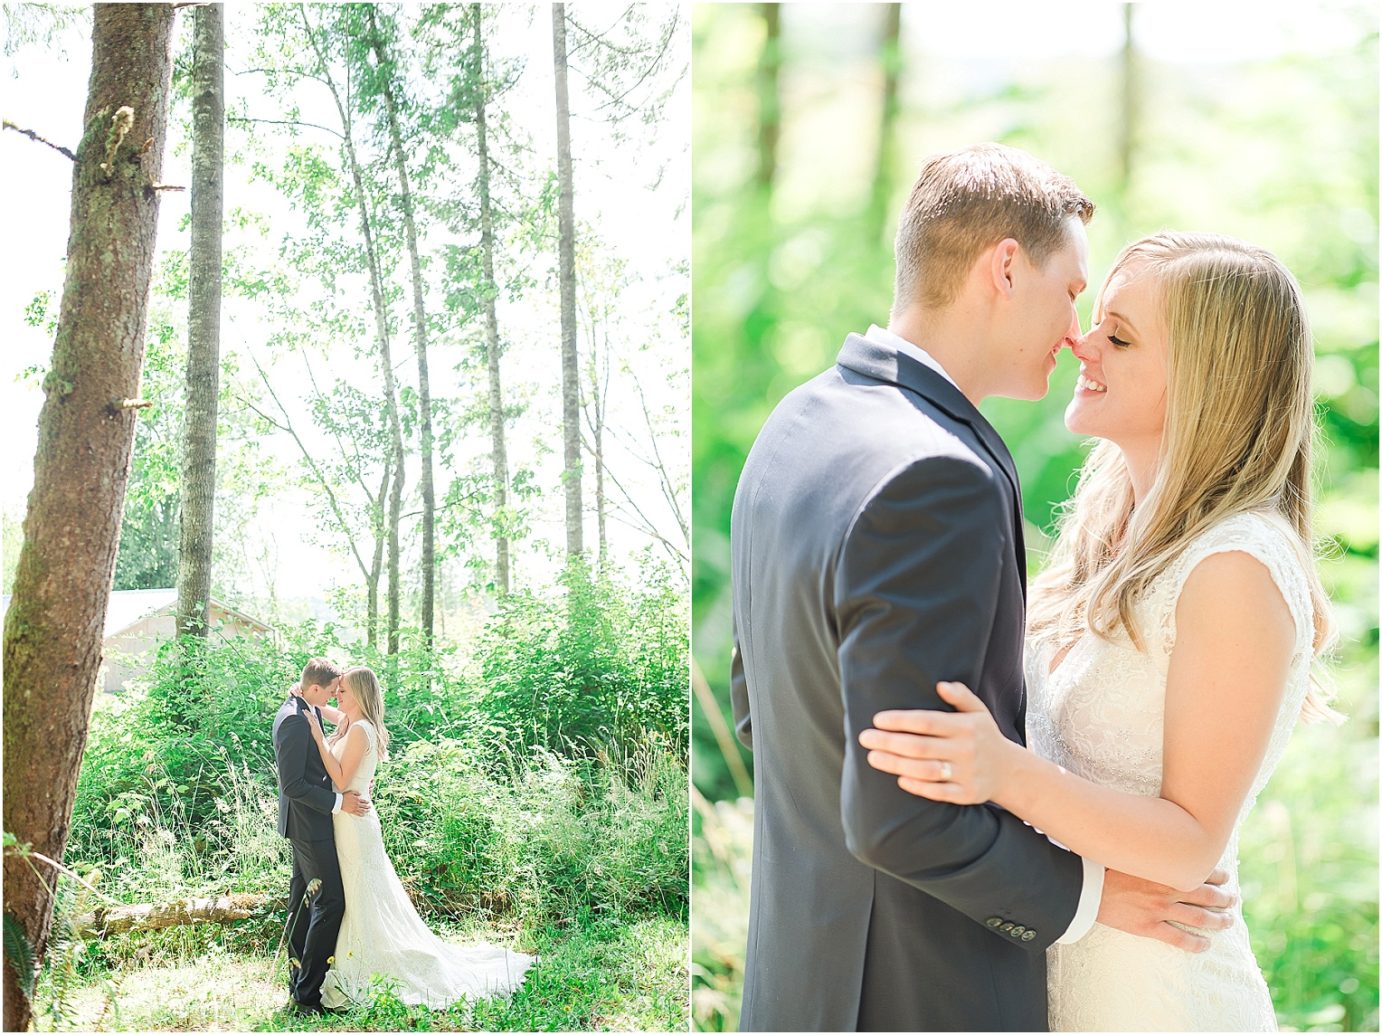 DIY backyard onalaska wedding Onalaska Photographer Bryan and Olivia bride and groom portraits in the woods